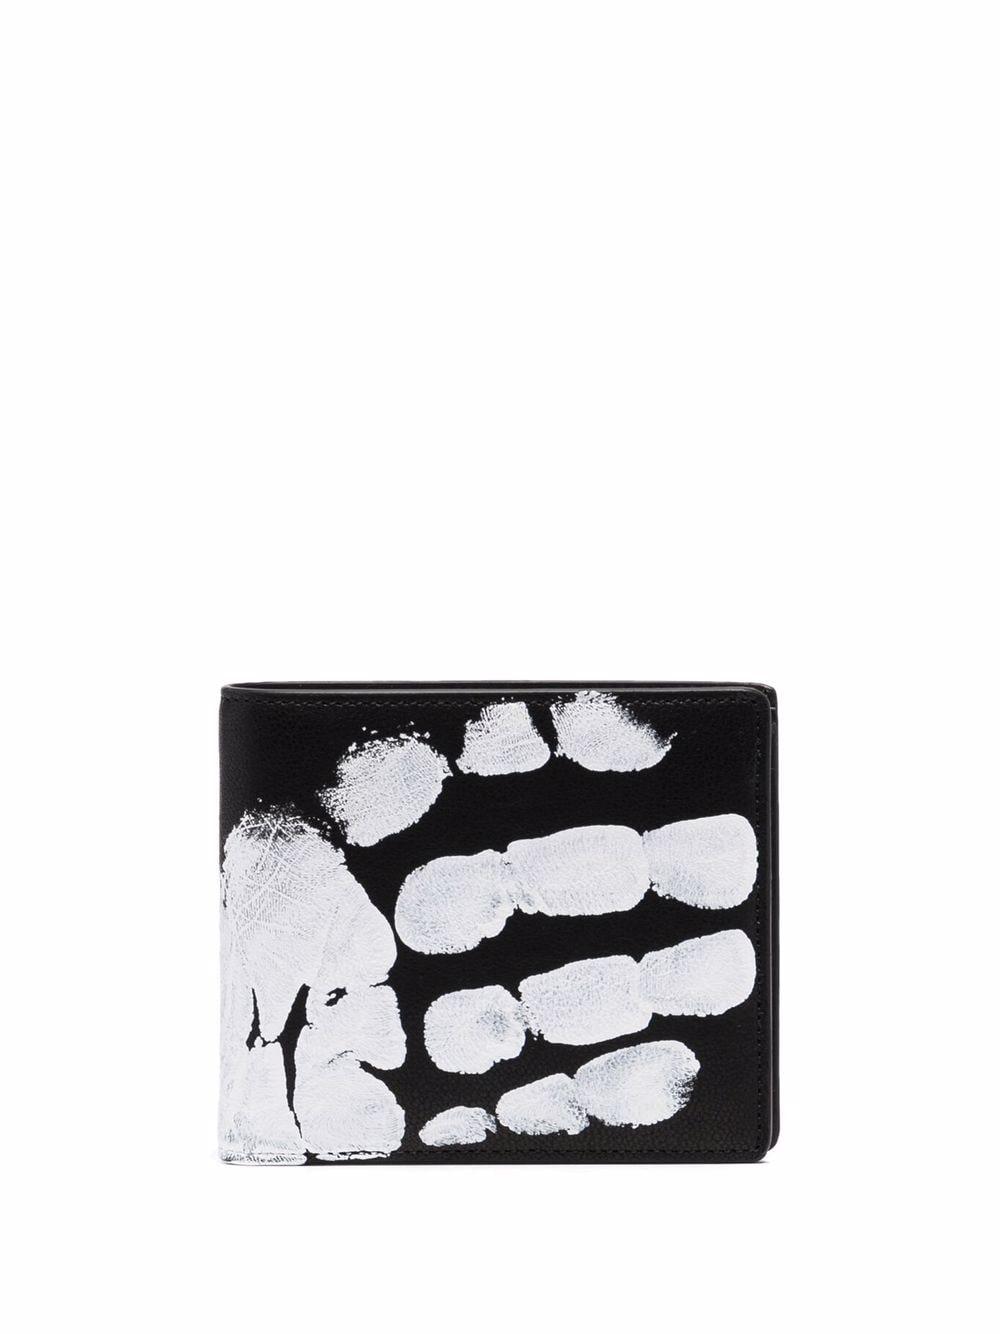 Maison Margiela Hand-print Wallet in Black for Men | Lyst